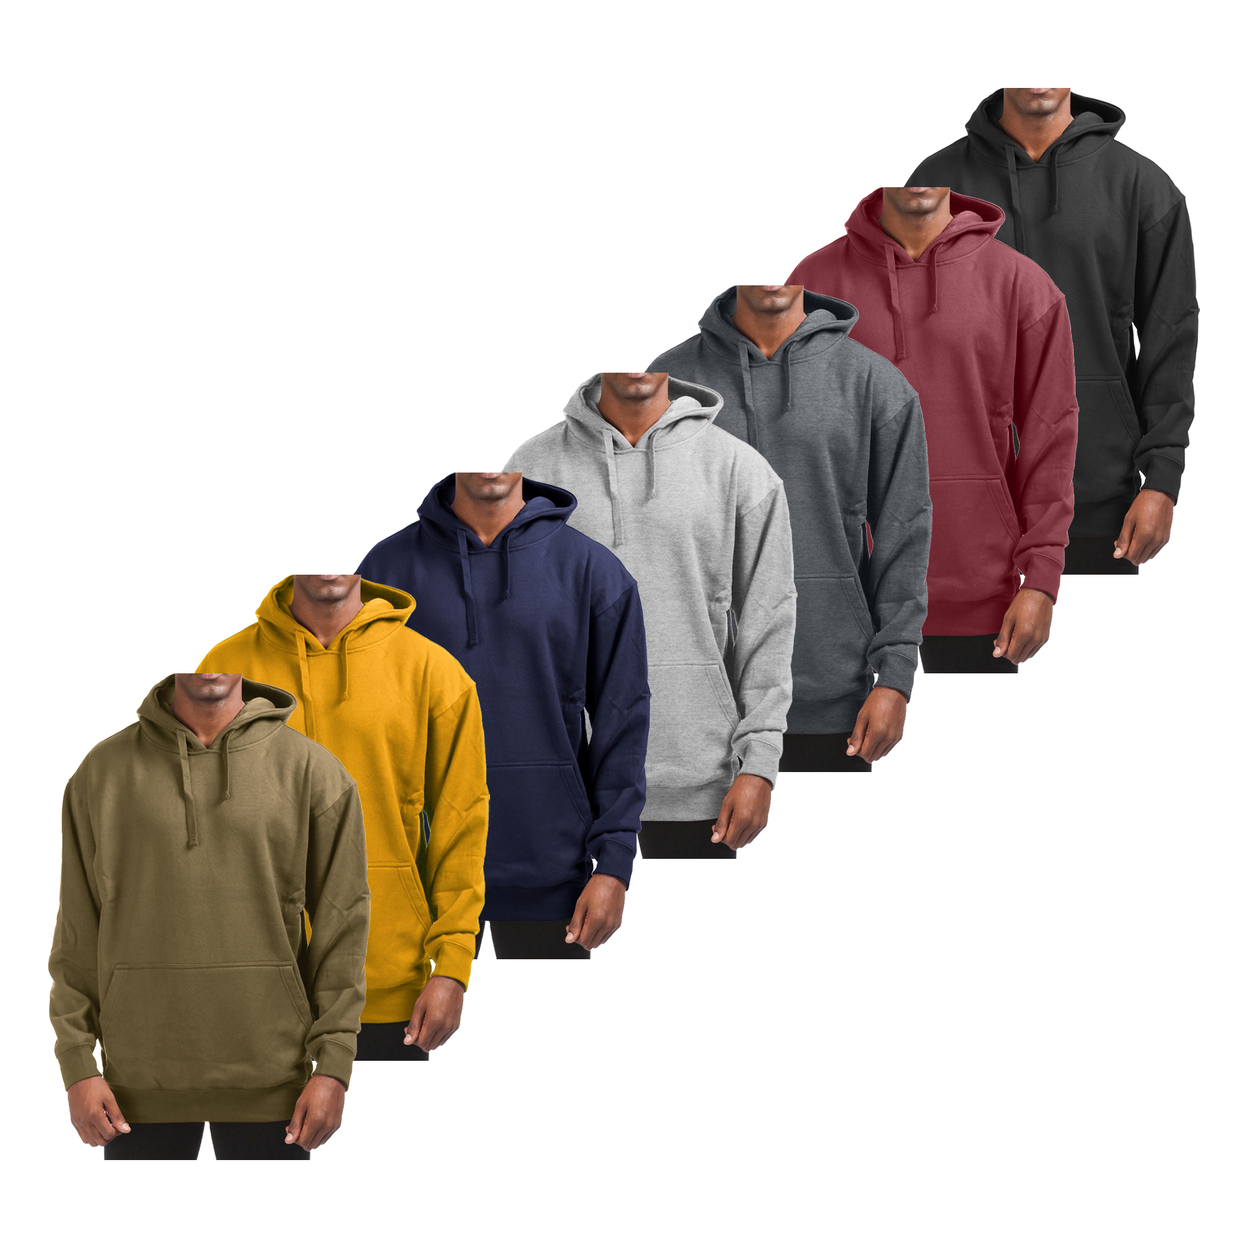 2-Pack: Men's Super-Soft Winter Warm Cotton-Blend Fleece Pullover Hoodie With Kangaroo Pocket - Black & Black, Medium